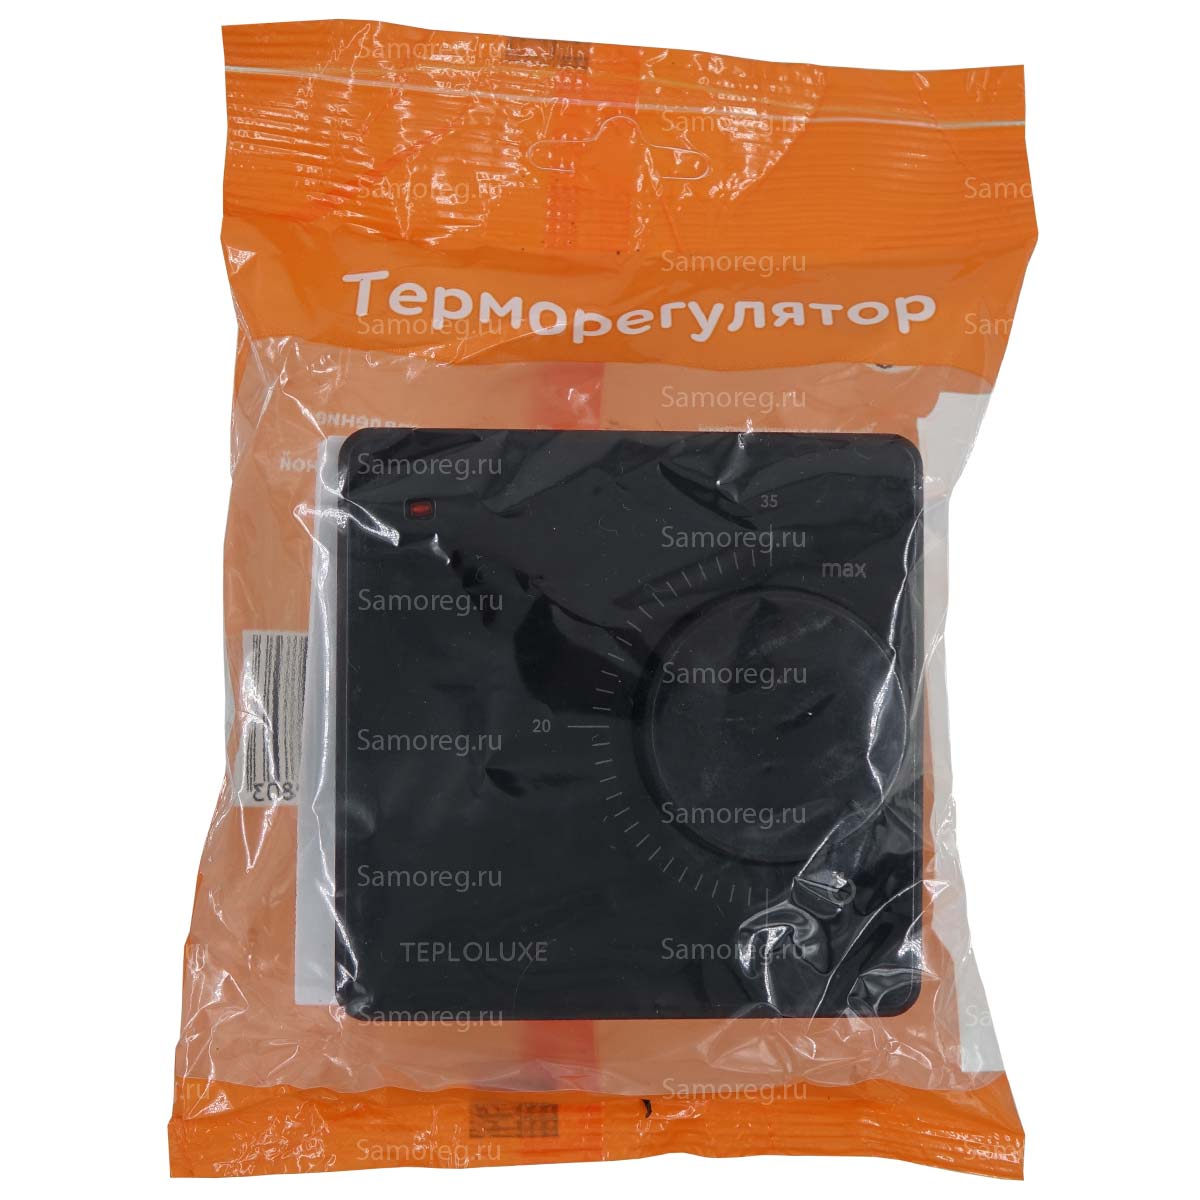 Терморегулятор Теплолюкс LC 001 Flow-pack чёрный